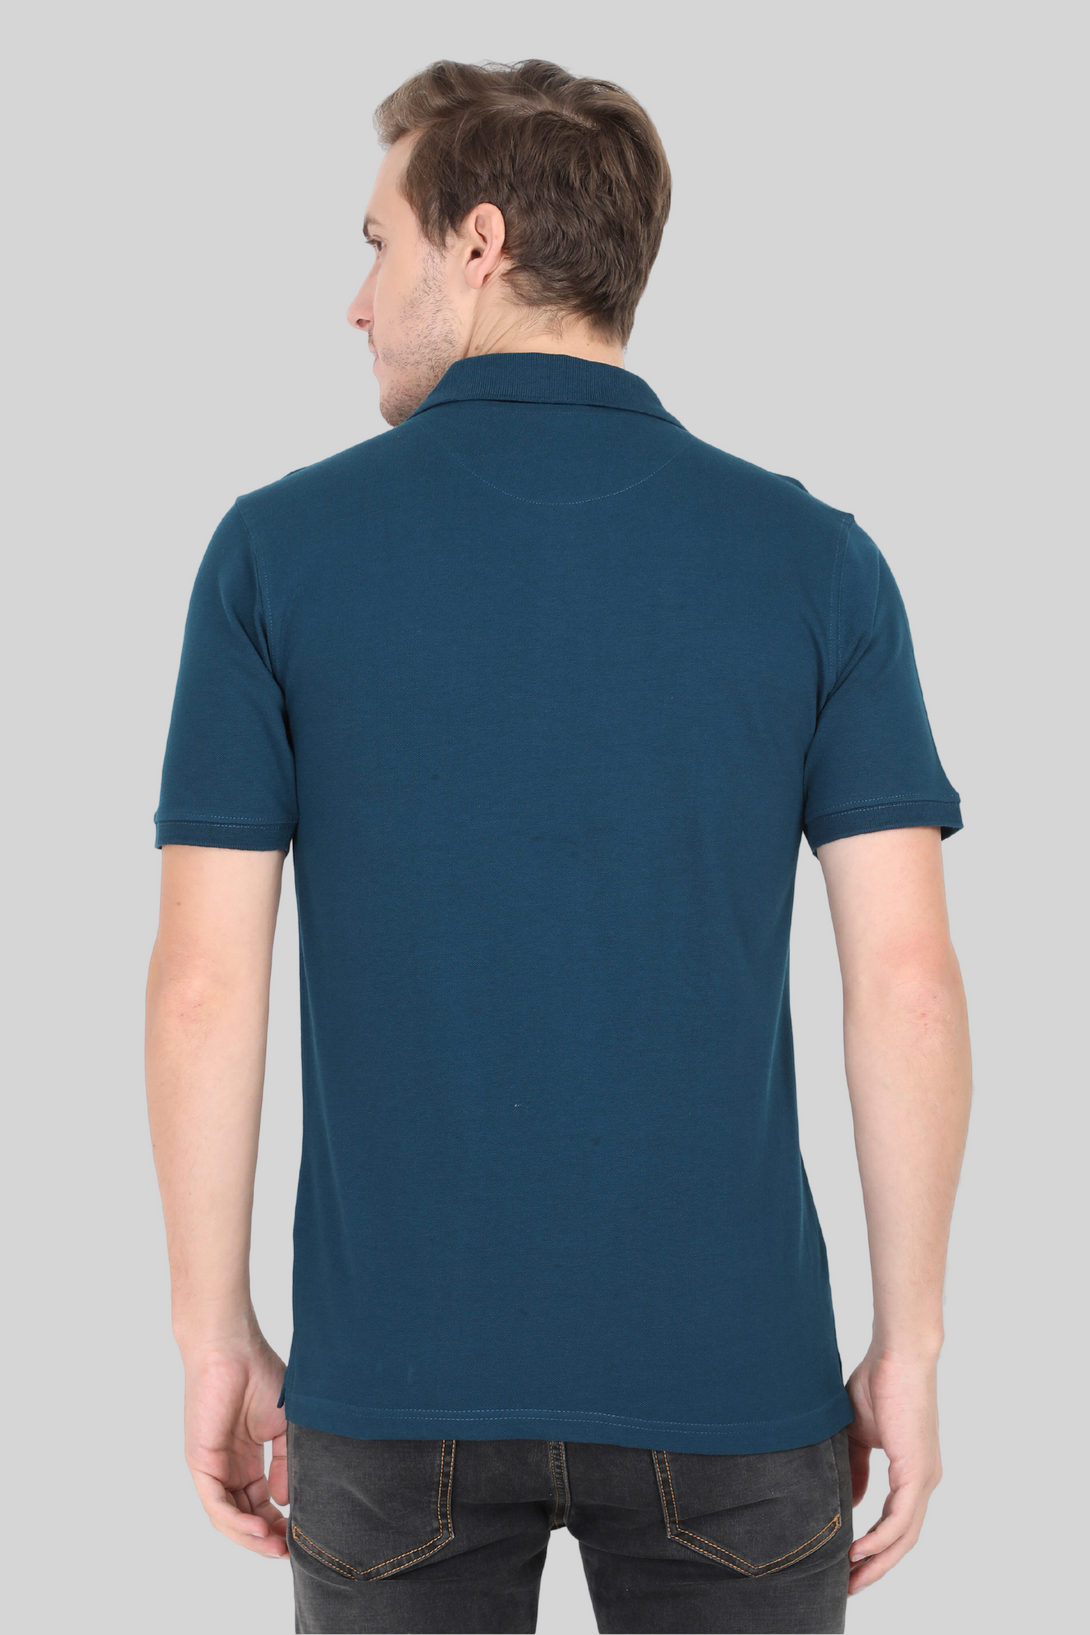 Petrol Blue Polo T-Shirt For Men - WowWaves - 6